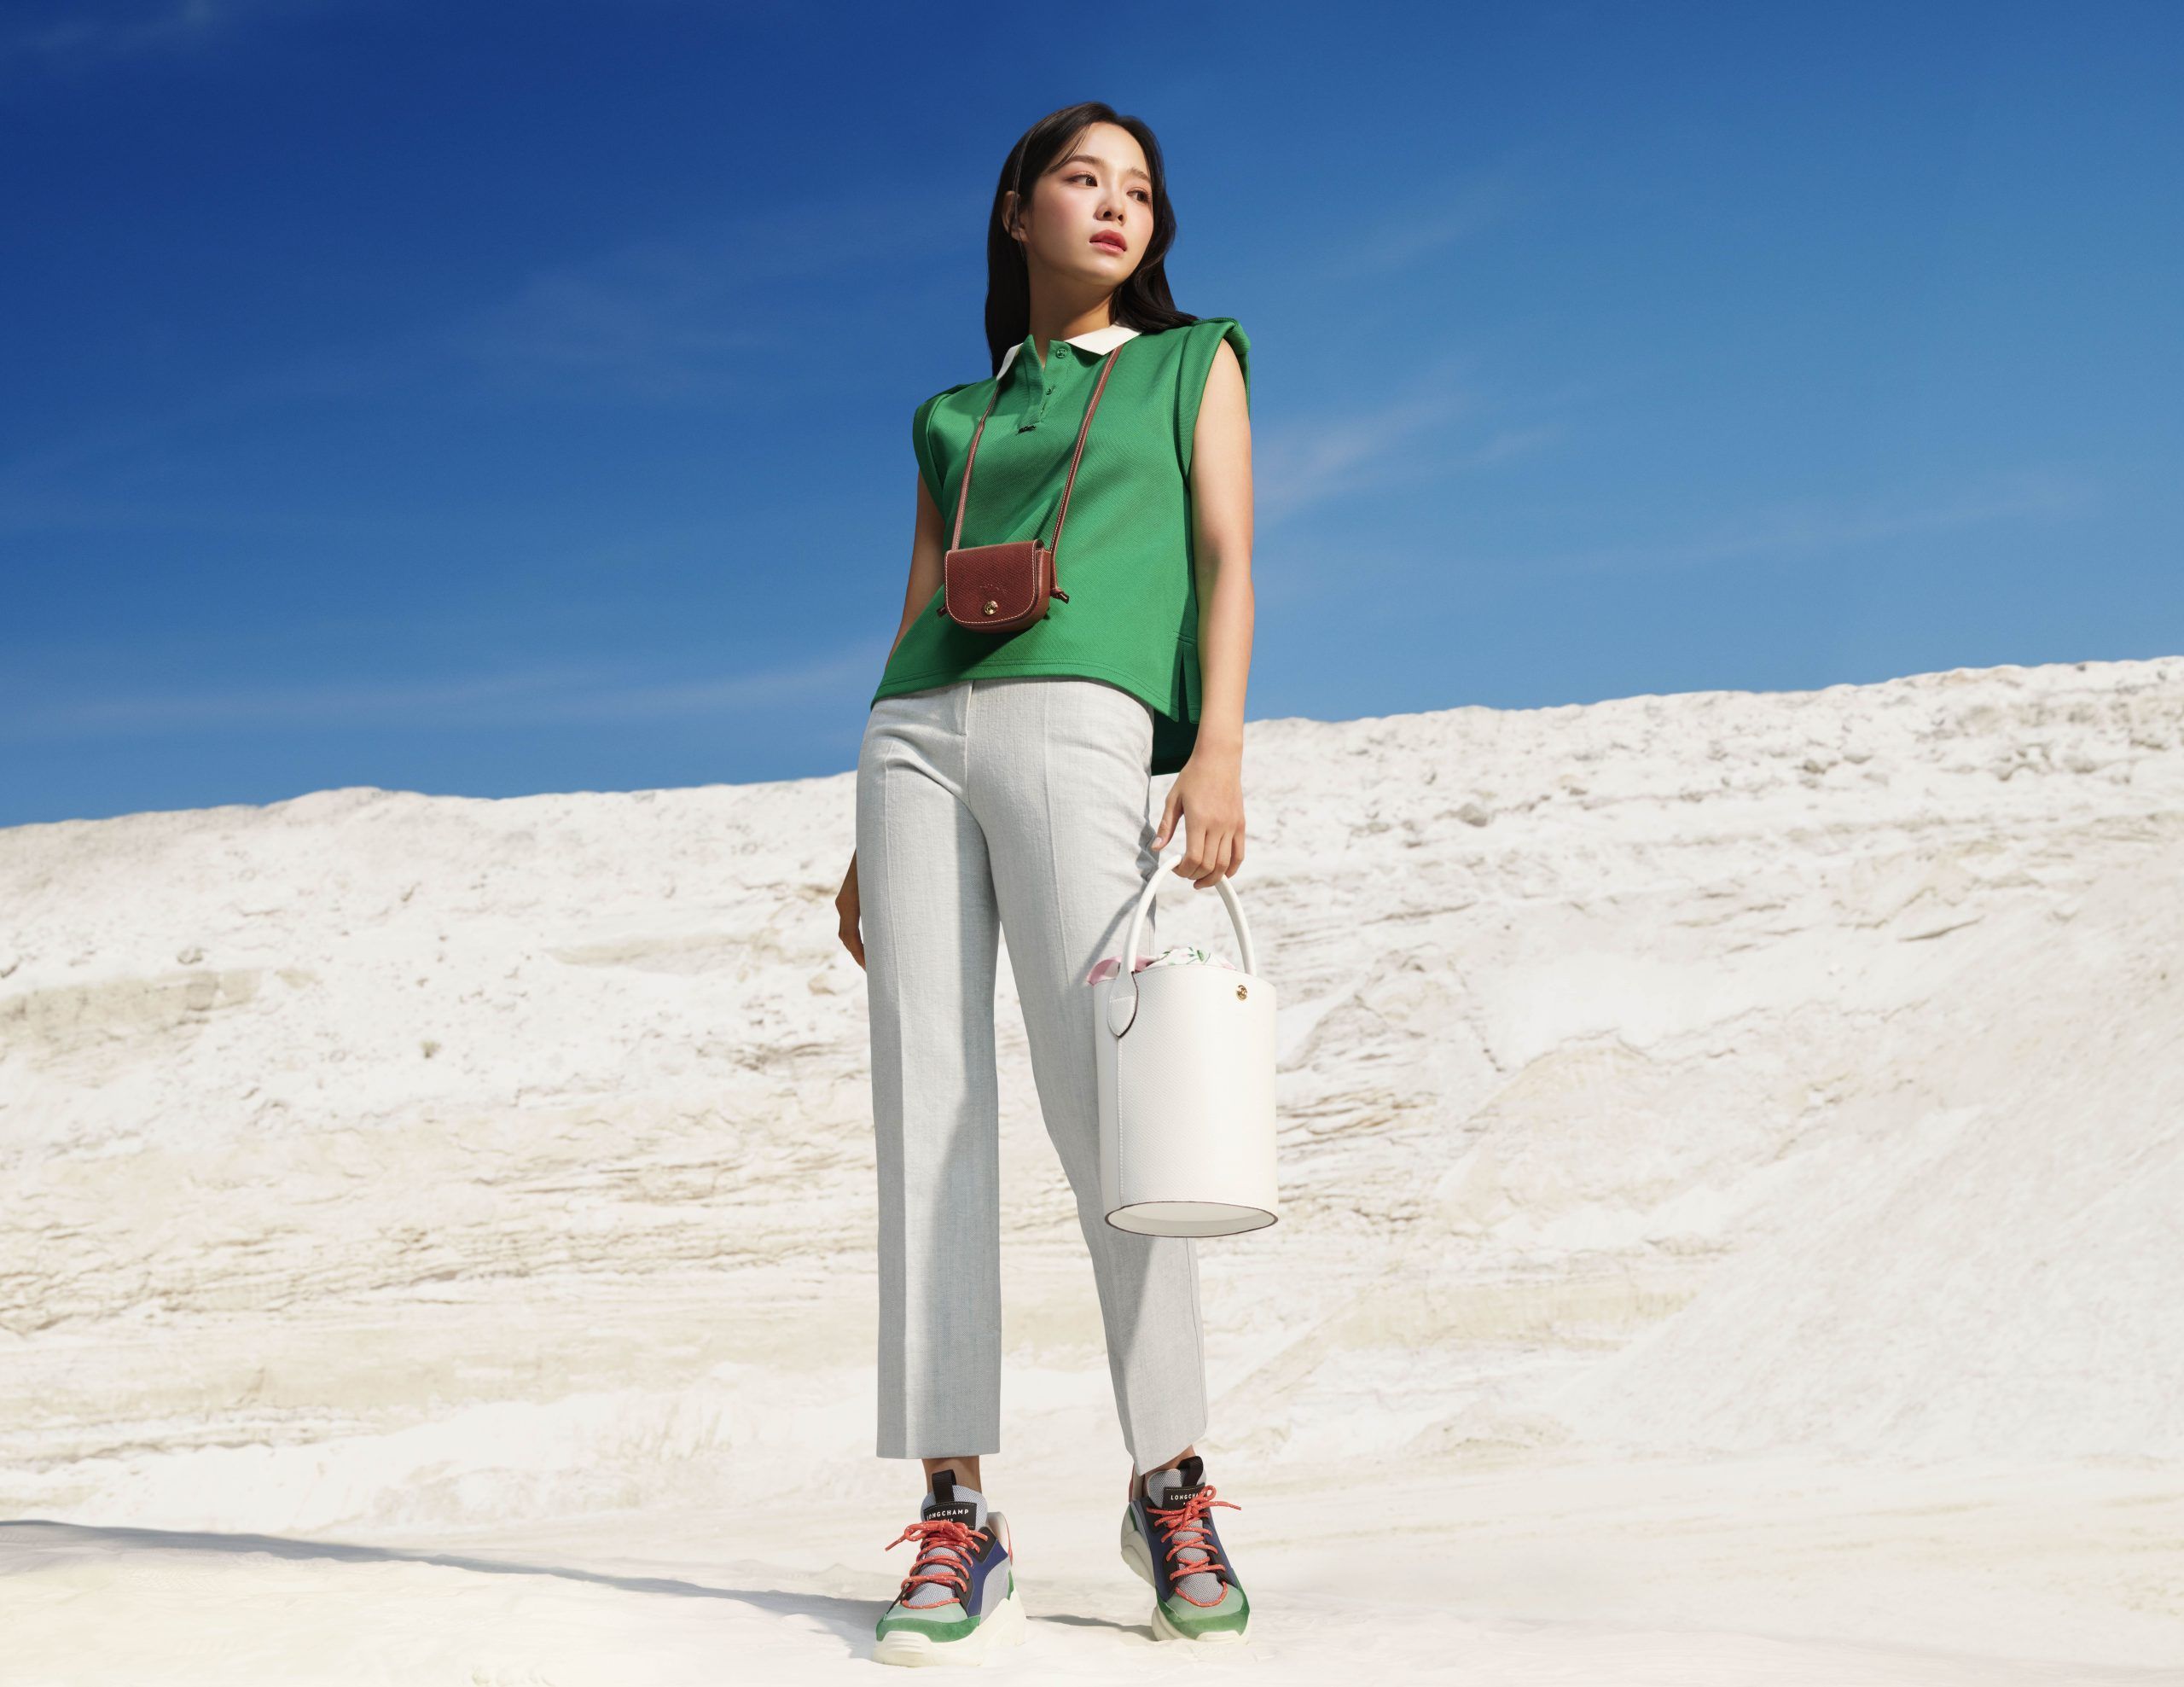 Longchamp names Kim Se-jeong as its ambassador in Asia